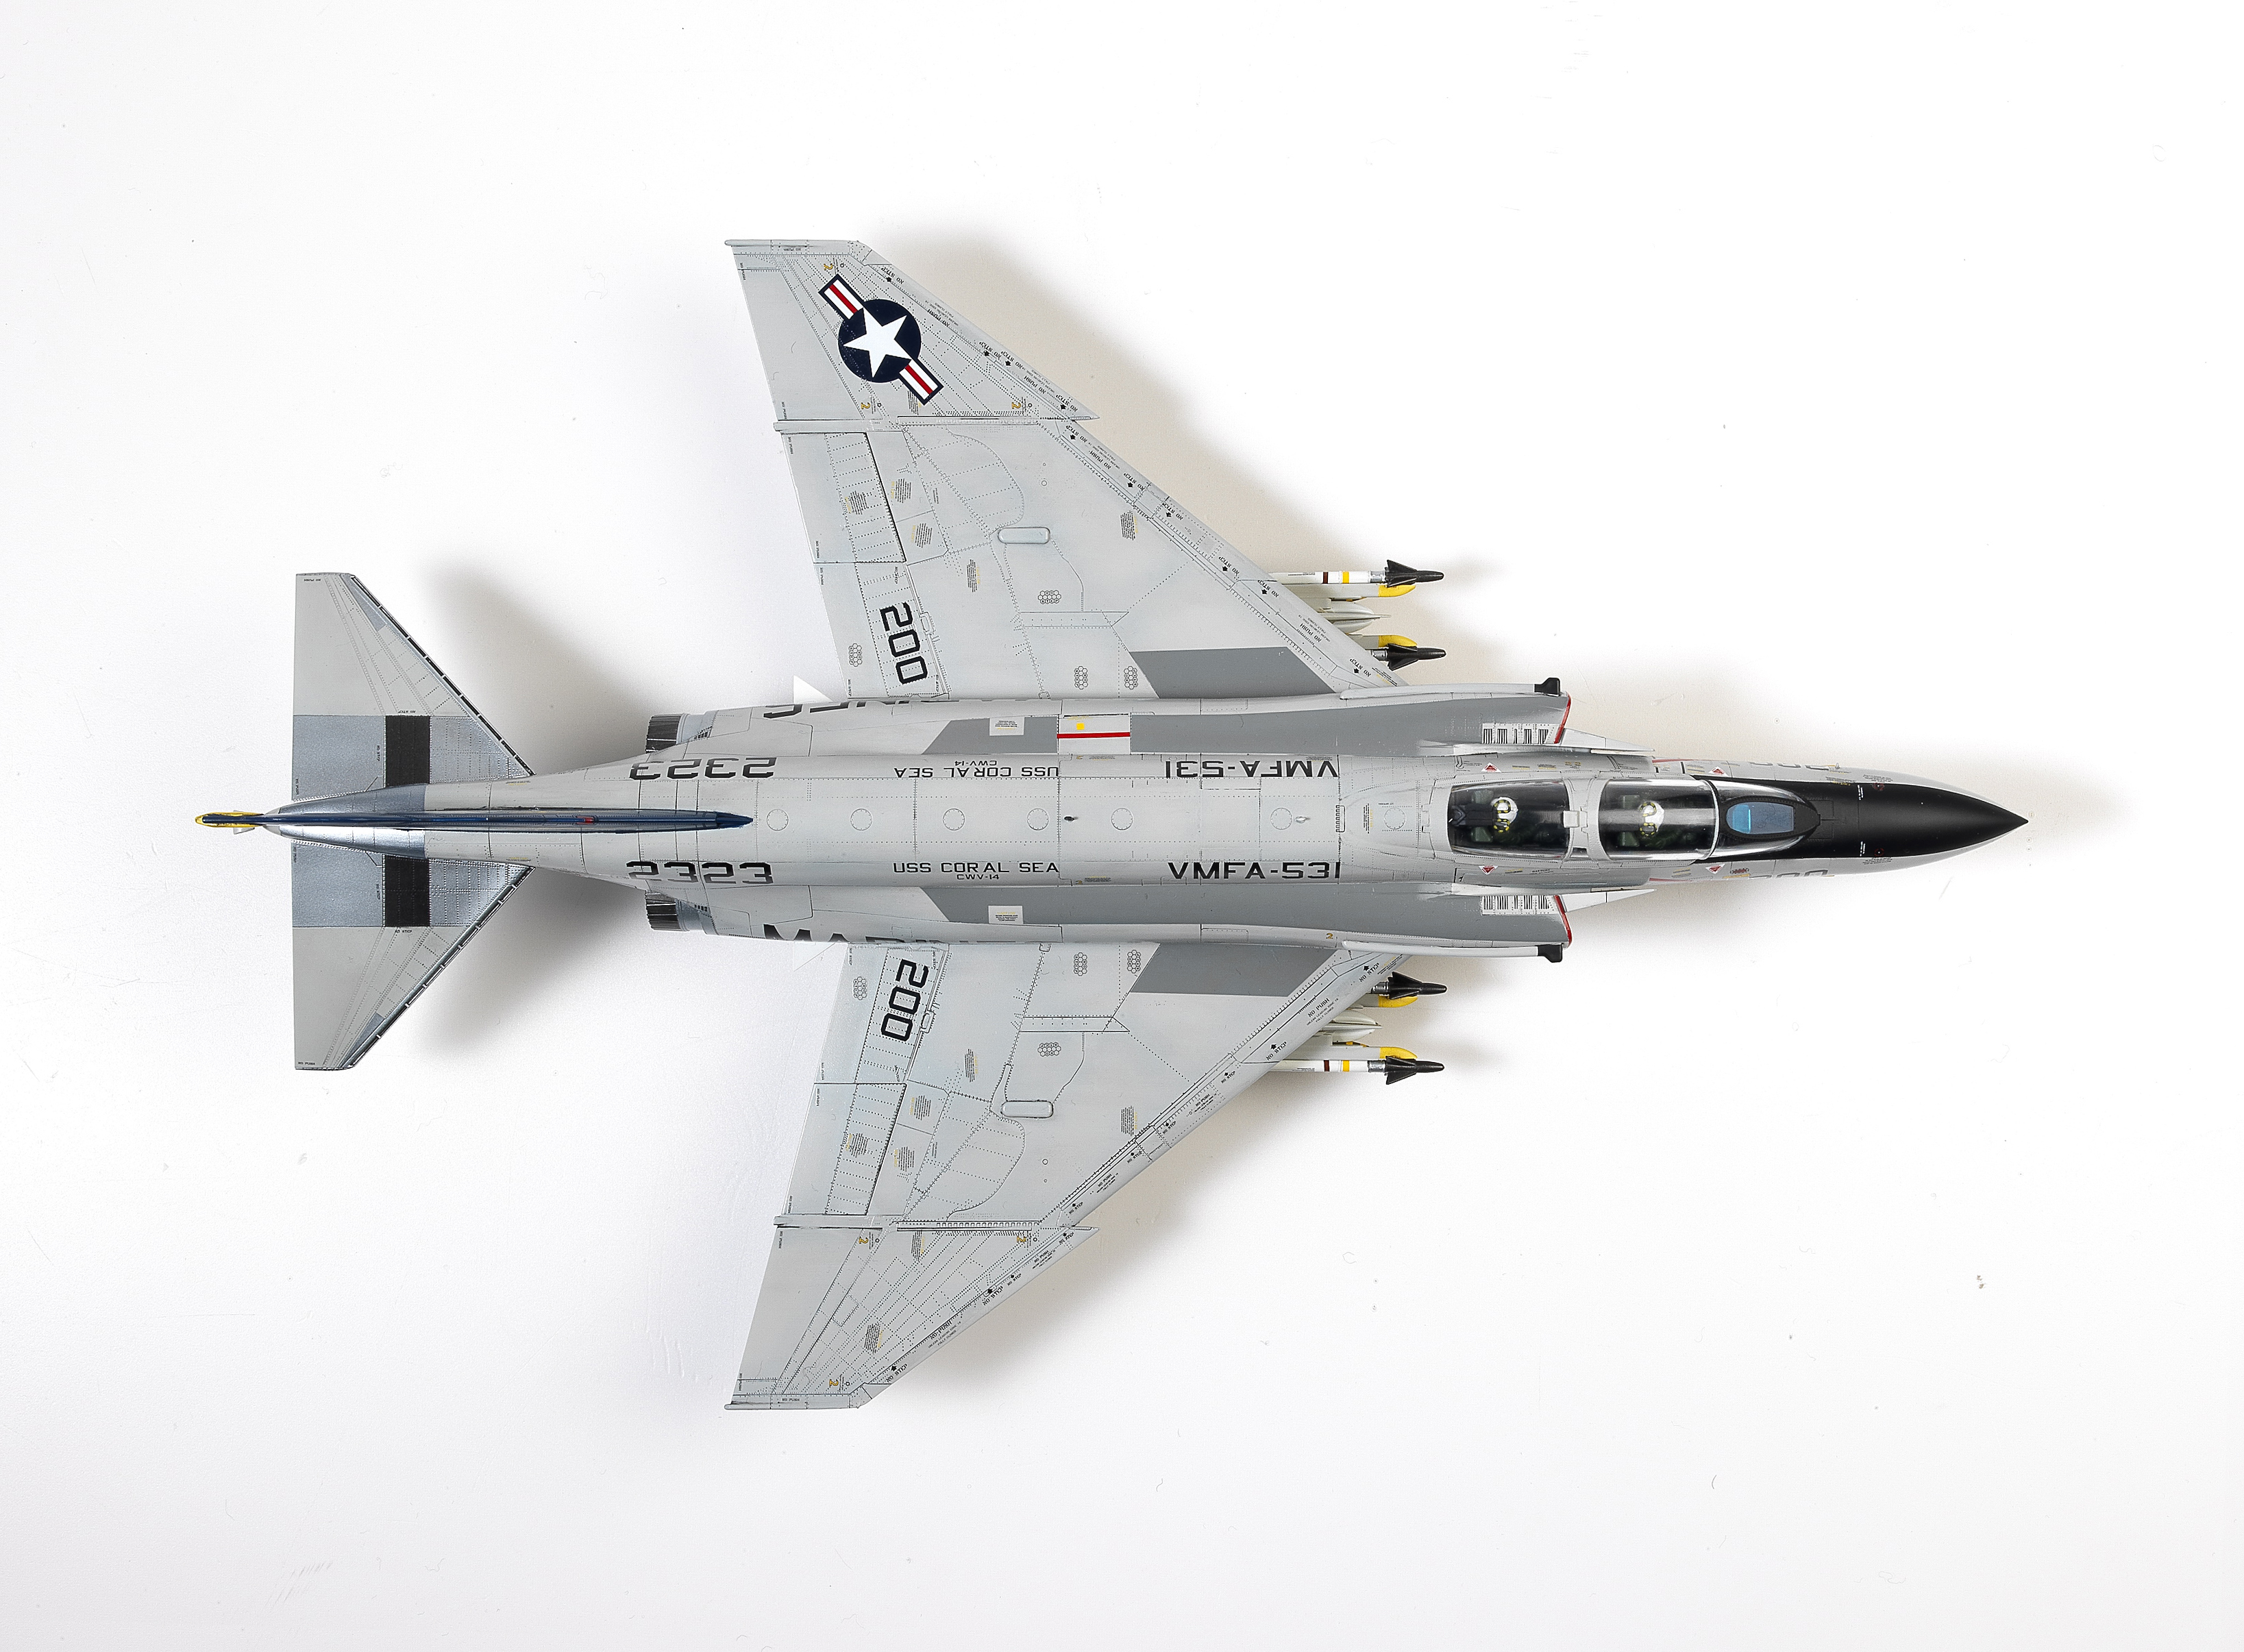 Academy Model Kit letadlo 12315 - USMC F-4B/N VMFA-531 "GRAY GHOSTS" (1:48)